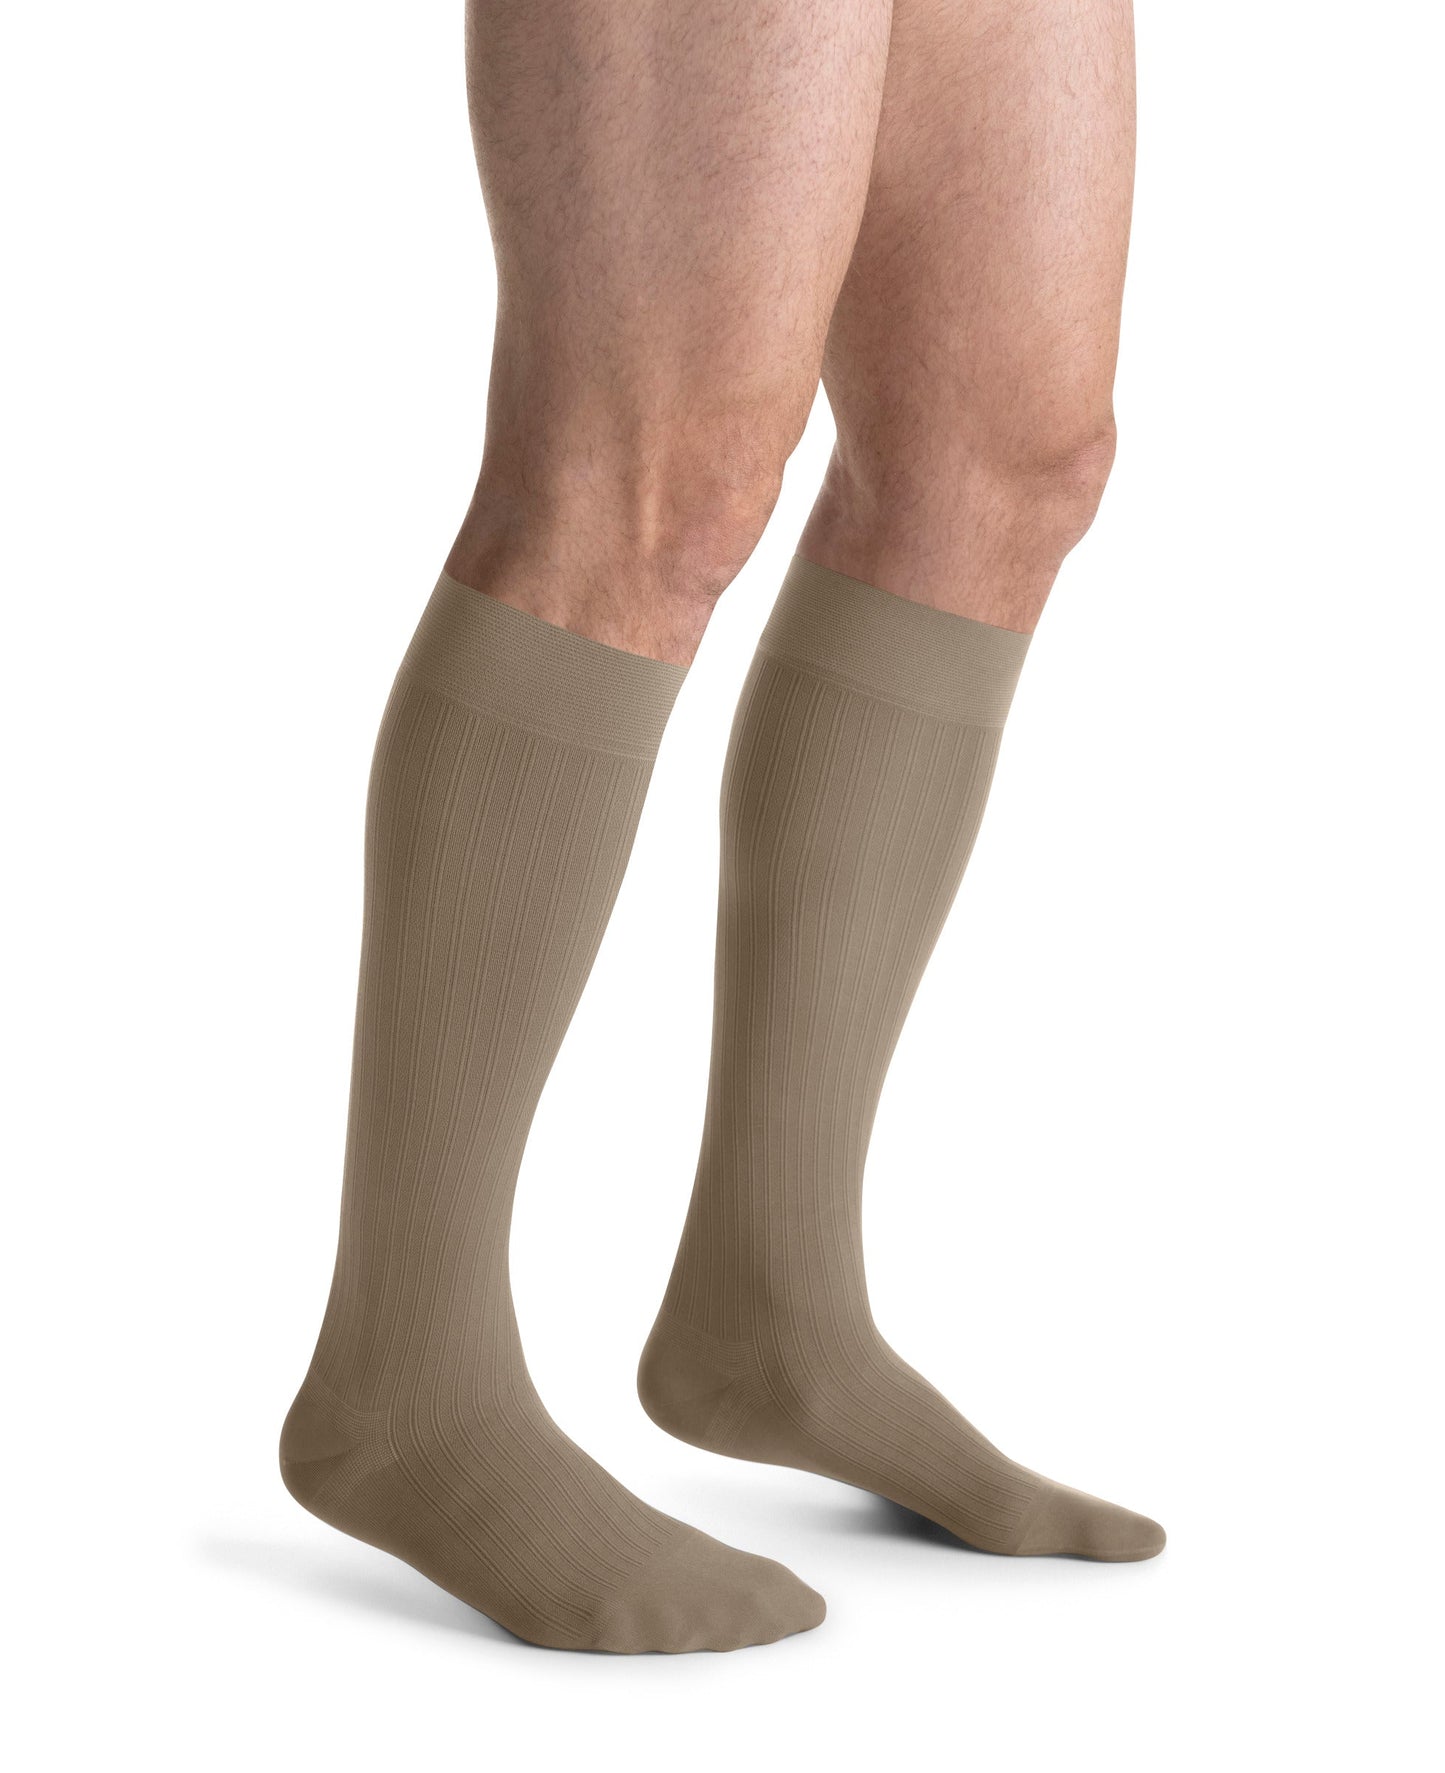 JOBST forMen Ambition Compression Socks 20-30 mmHg Knee High SoftFit Closed Toe Long